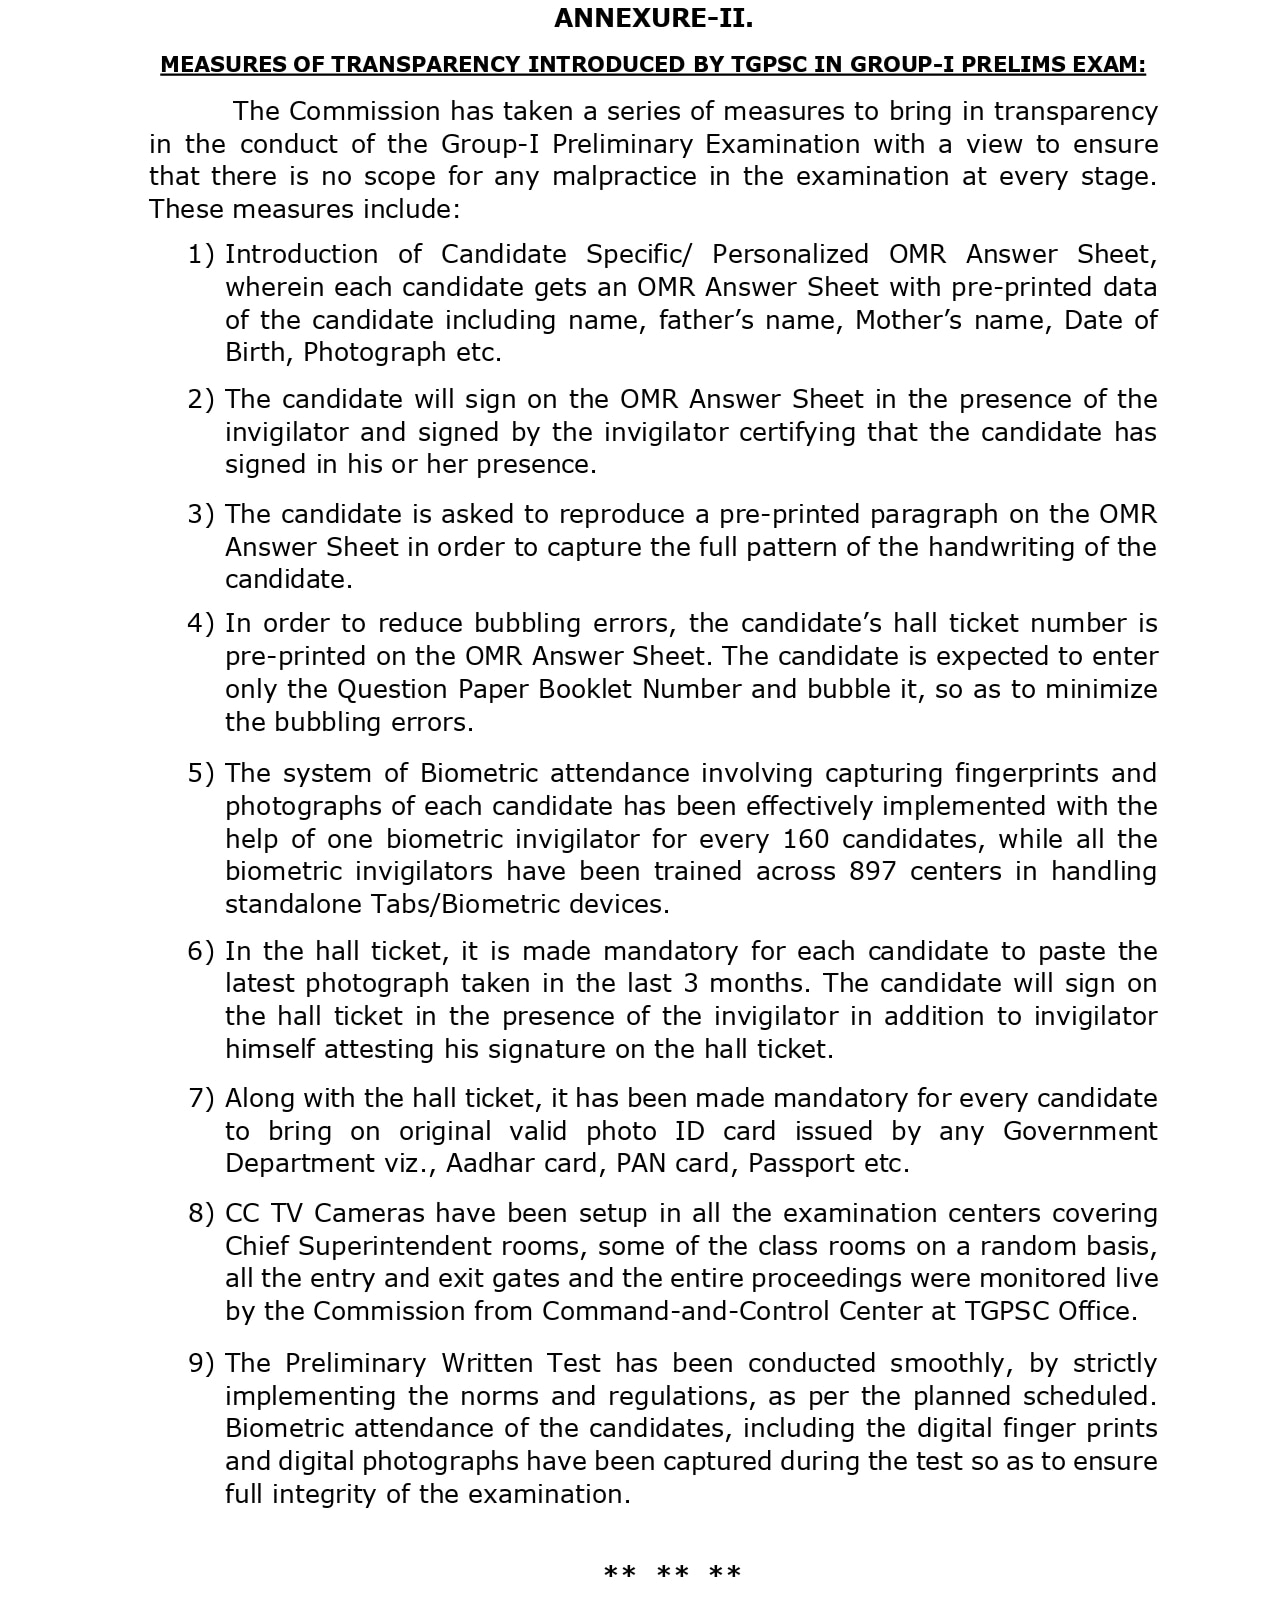 Group1 OMR Answer Sheets: 'గ్రూప్‌-1' అభ్యర్థులకు అలర్ట్, జూన్ 24 నుంచి వెబ్‌సైట్‌లో OMR ఆన్సర్ షీట్లు అందుబాటులోకి